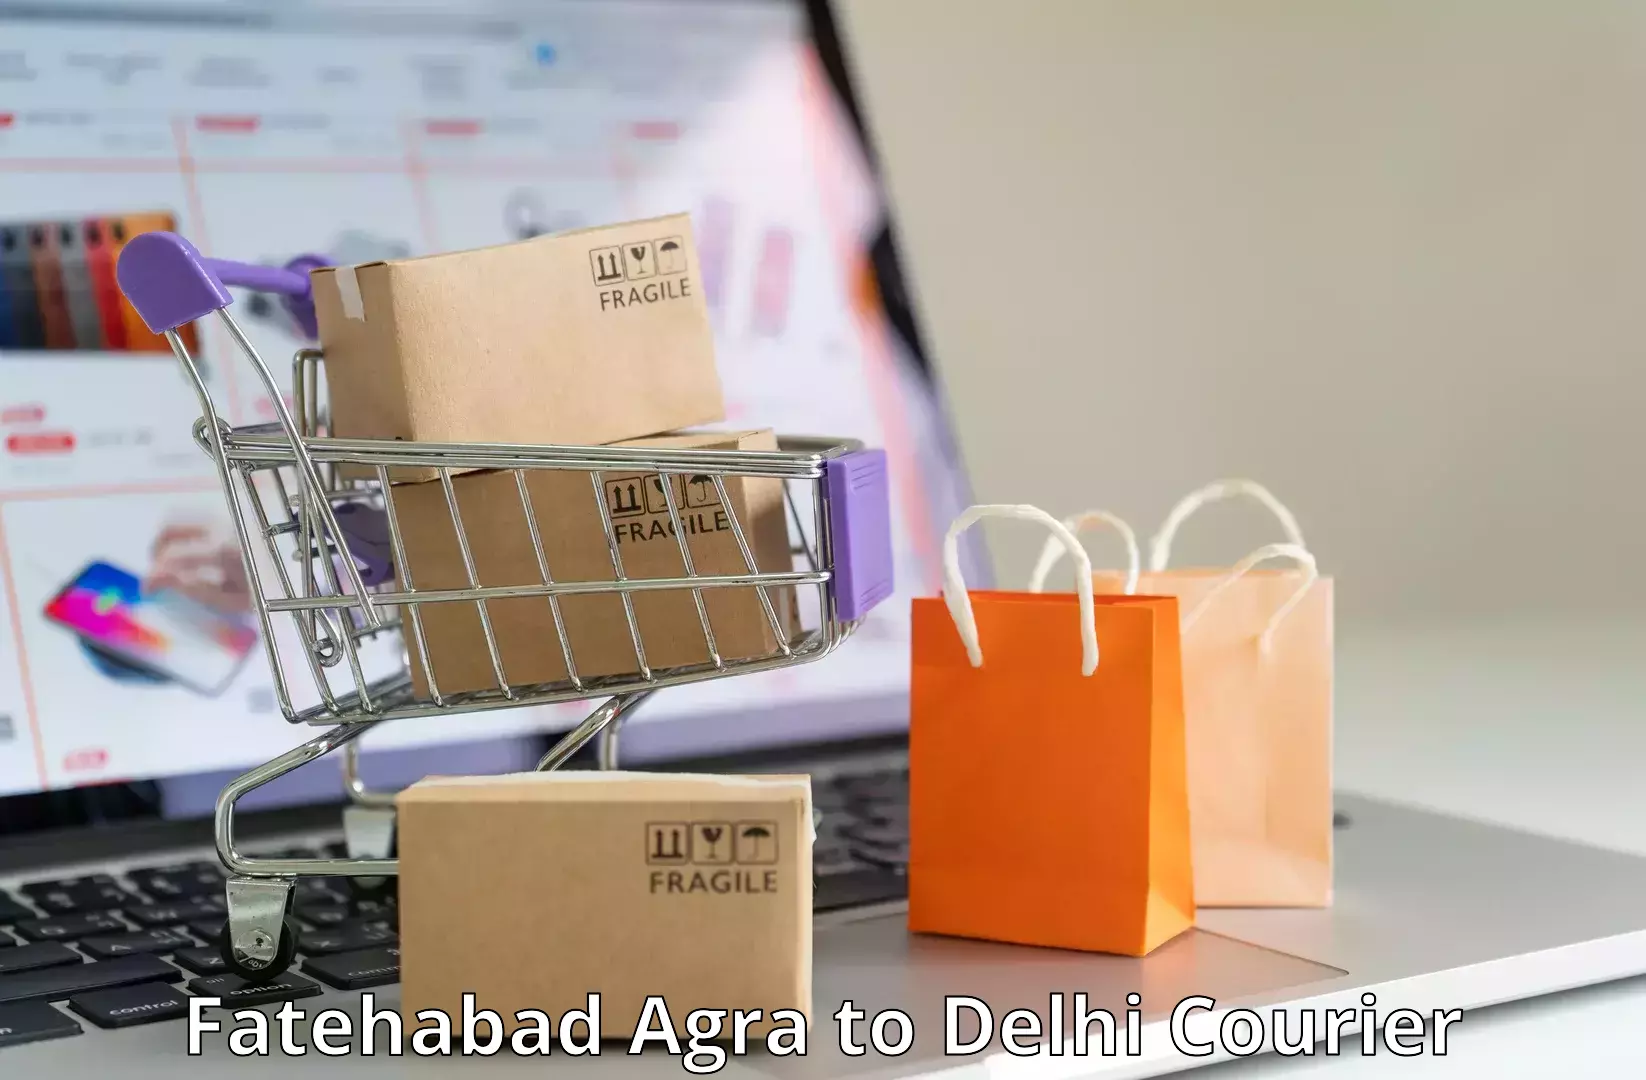 International parcel service Fatehabad Agra to East Delhi